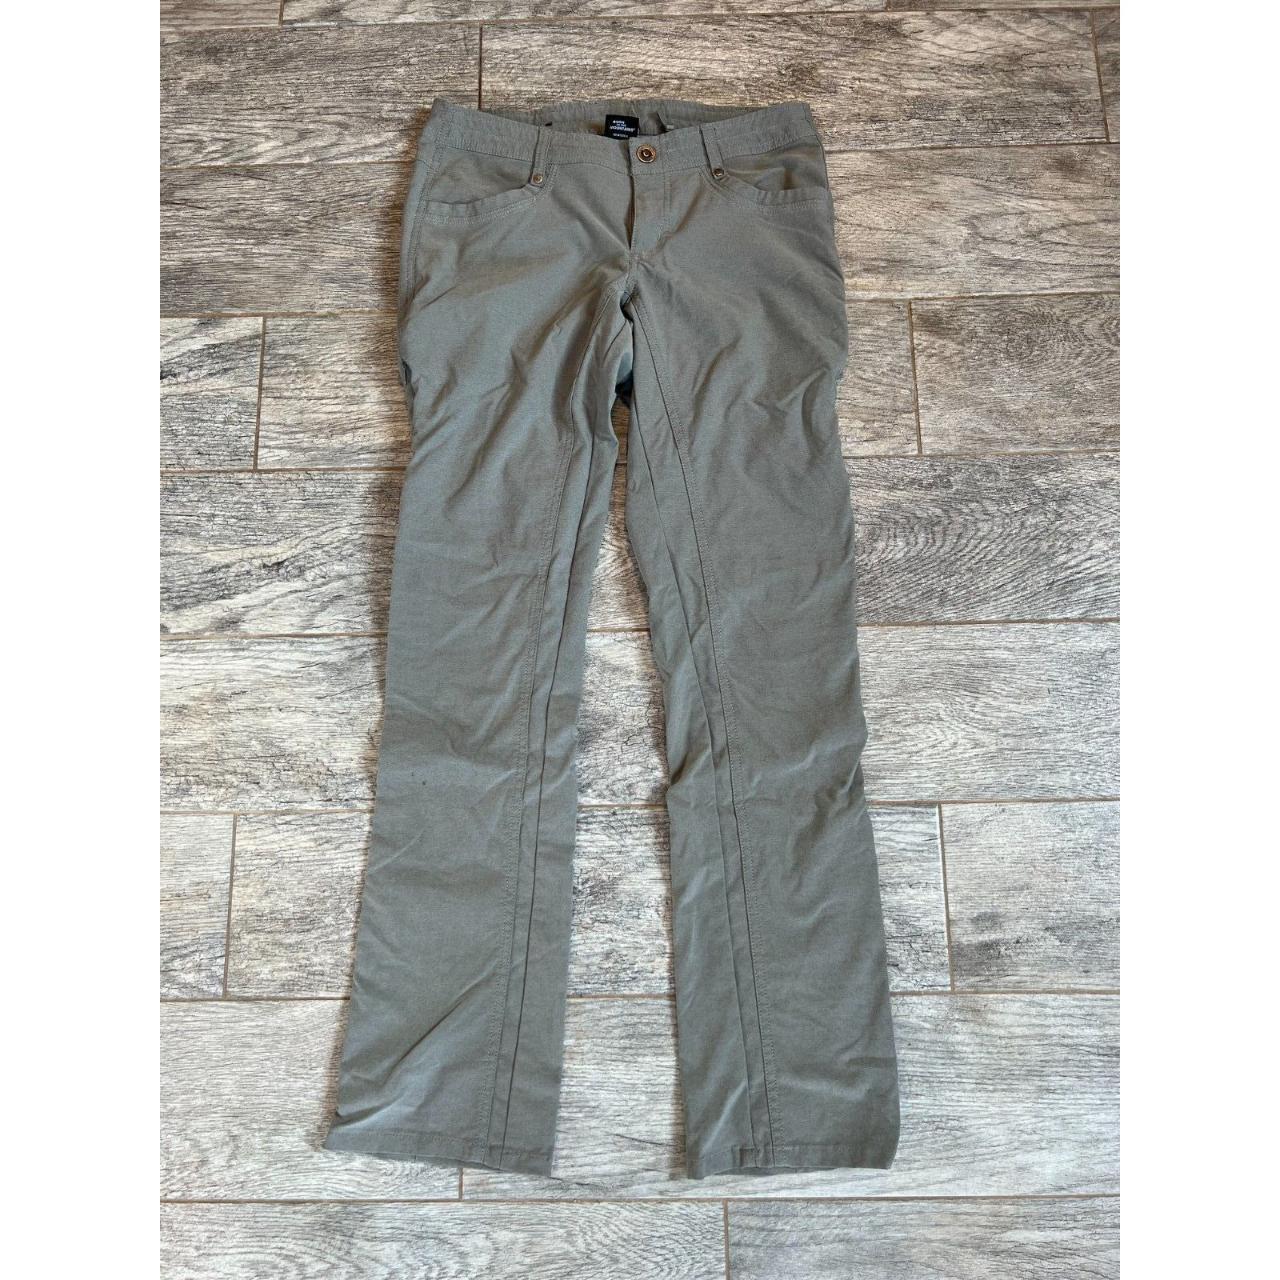 Kuhl Hiking Pants Outdoor Trekr size 4 Chino / Khaki - Depop